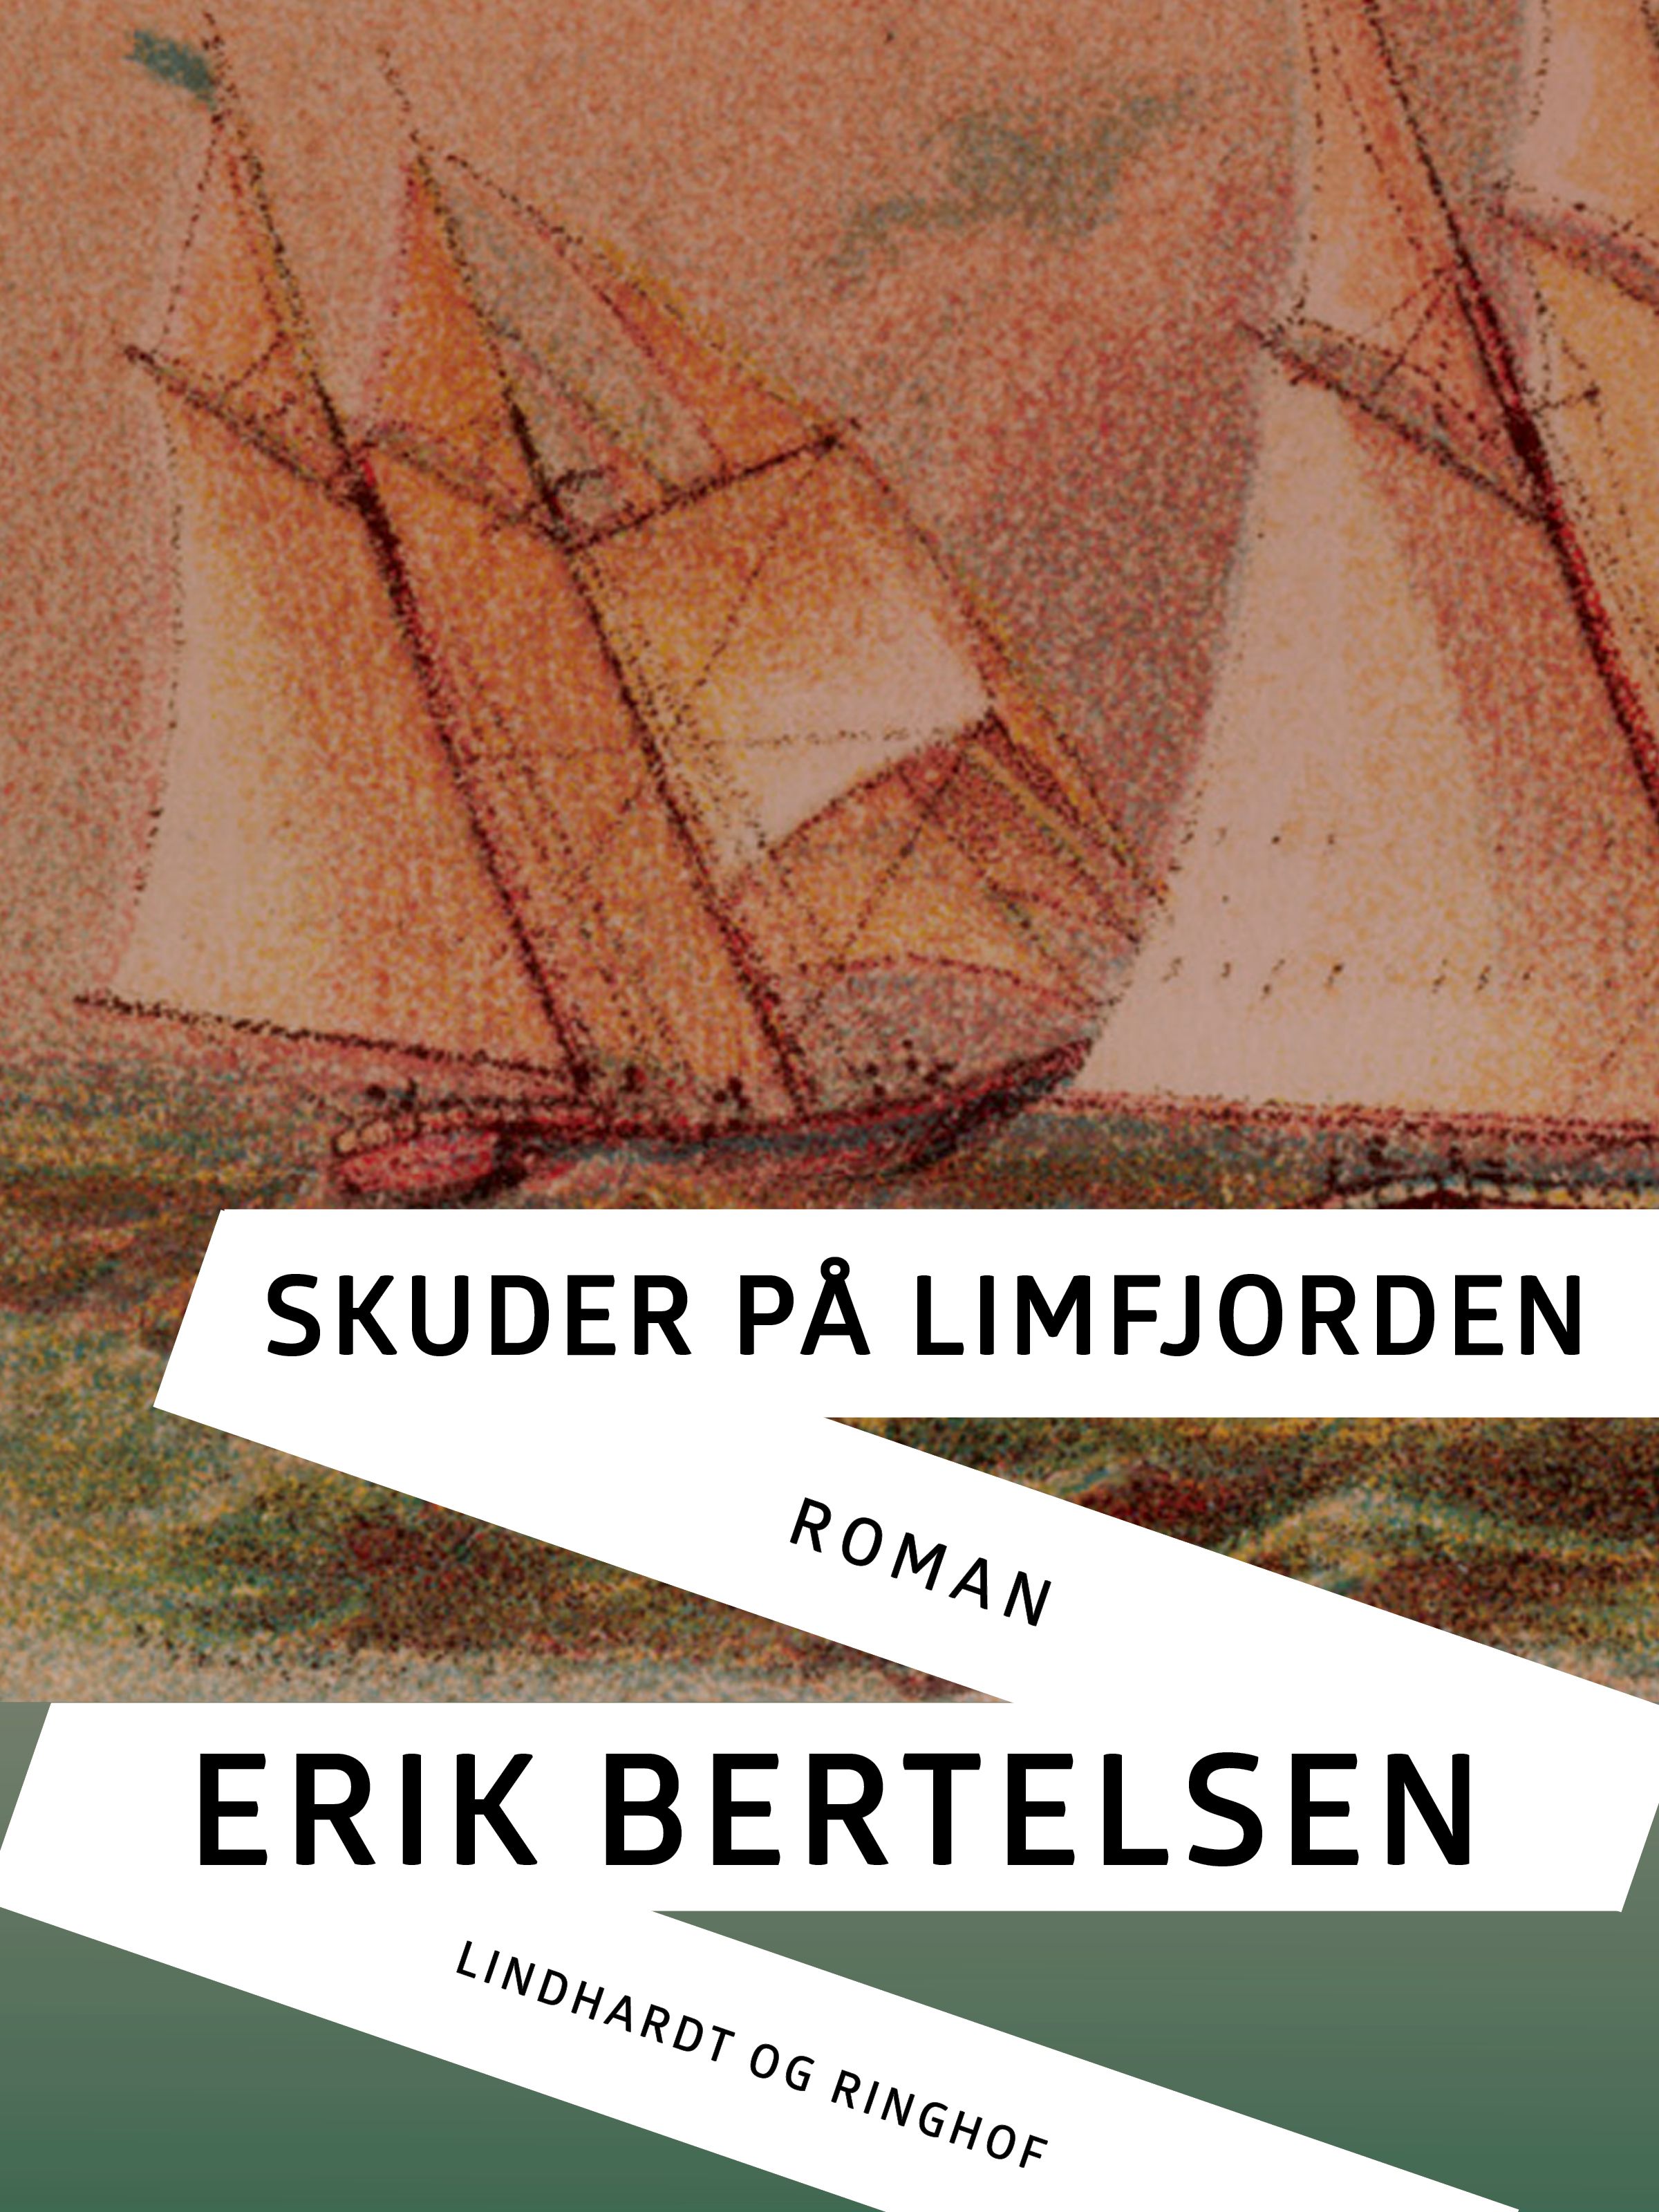 Skuder på Limfjorden, ljudbok av Erik Bertelsen